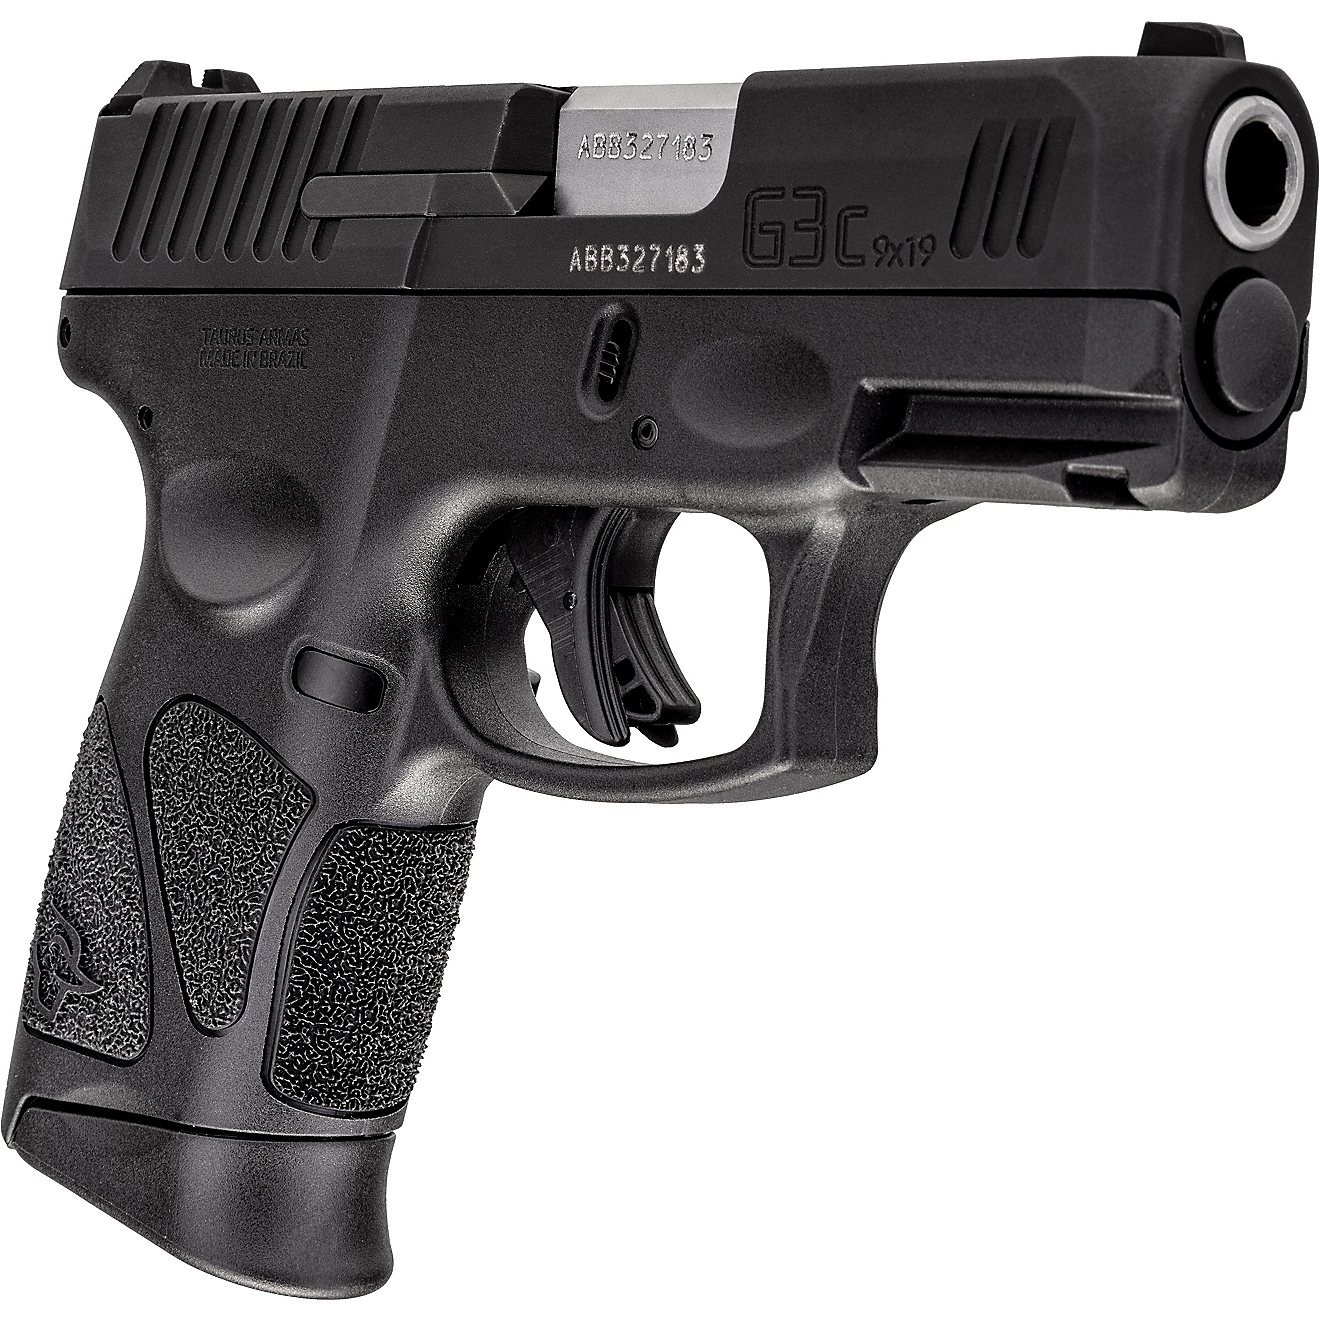 Taurus G3C 9mm Pistol                                                                                                            - view number 3